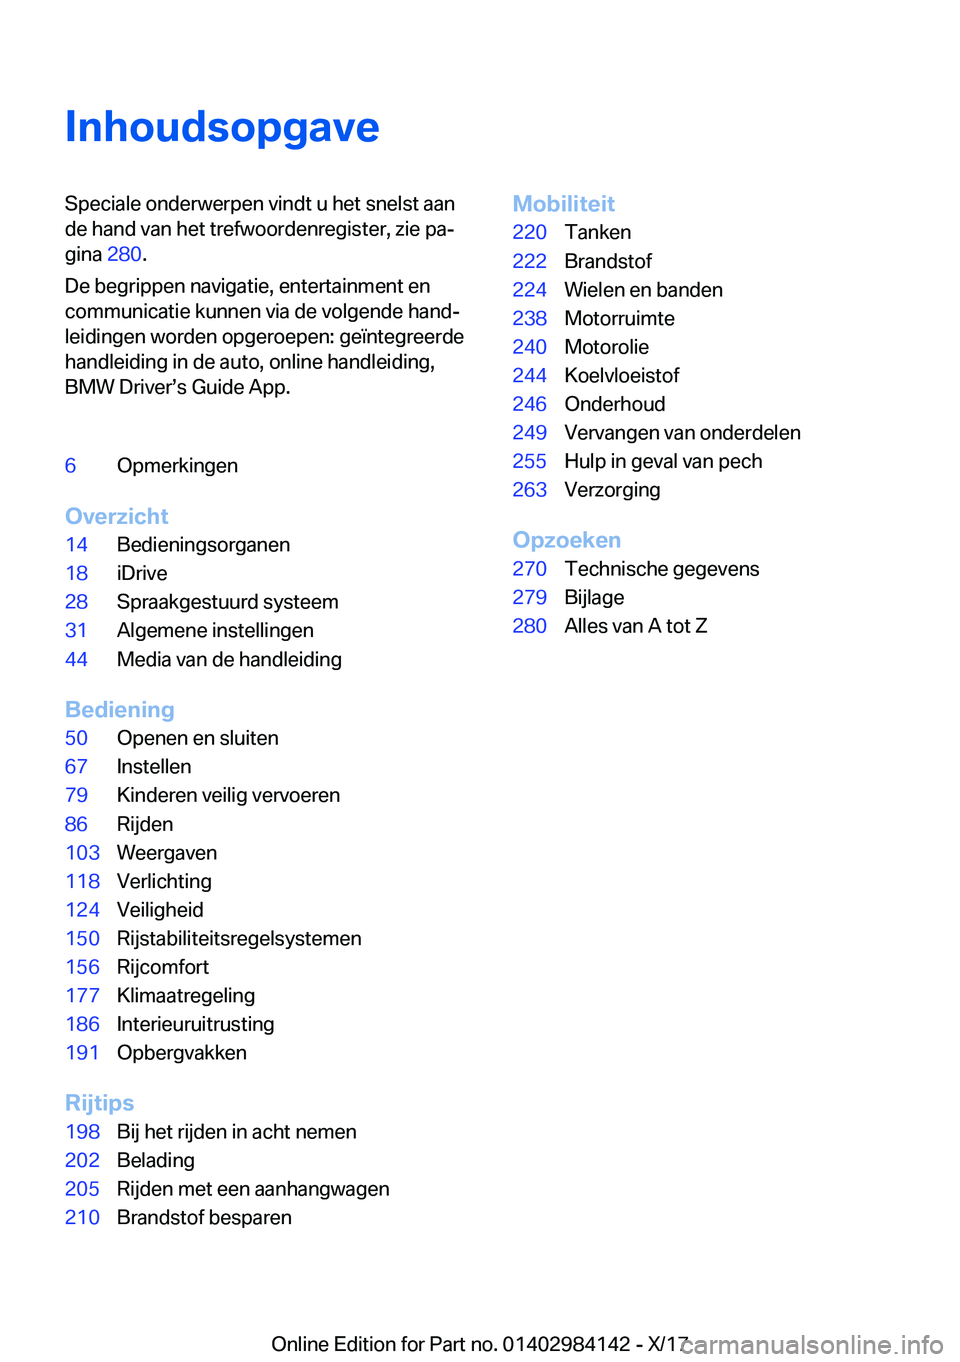 BMW 2 SERIES COUPE 2018  Instructieboekjes (in Dutch) �I�n�h�o�u�d�s�o�p�g�a�v�e�S�p�e�c�i�a�l�e� �o�n�d�e�r�w�e�r�p�e�n� �v�i�n�d�t� �u� �h�e�t� �s�n�e�l�s�t� �a�a�n�d�e� �h�a�n�d� �v�a�n� �h�e�t� �t�r�e�f�w�o�o�r�d�e�n�r�e�g�i�s�t�e�r�,� �z�i�e� �p�aj